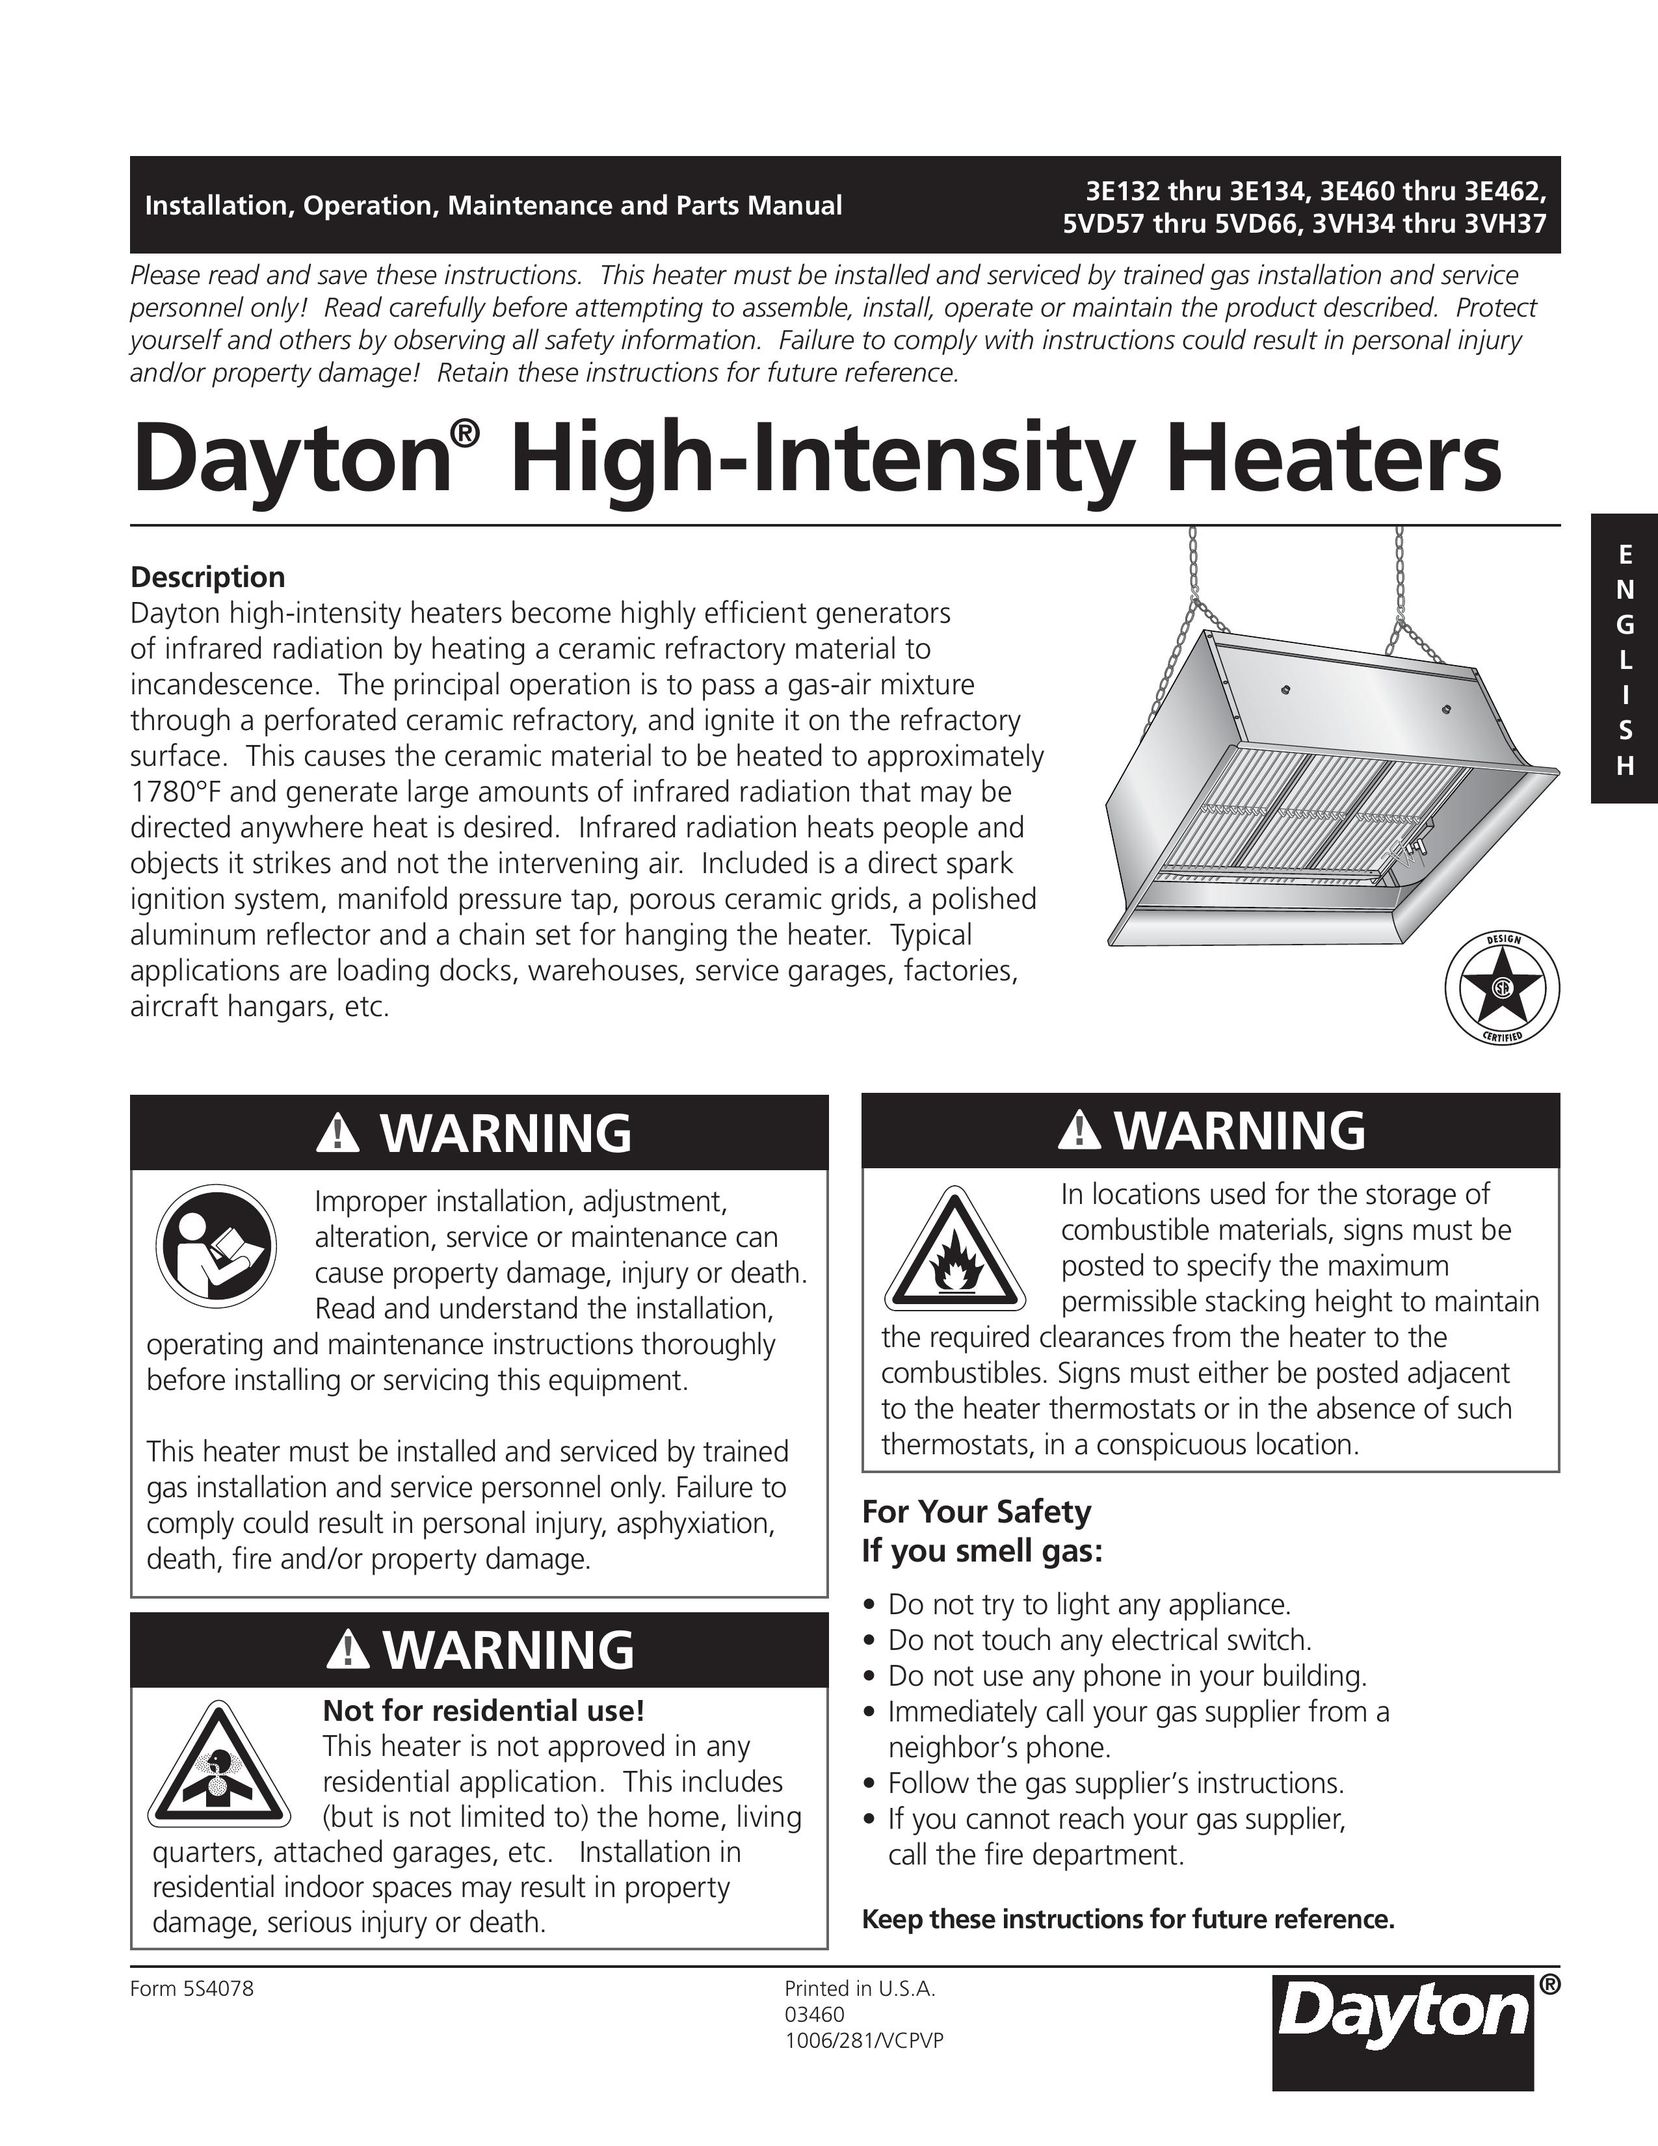 Dayton 3VH34 Electric Heater User Manual